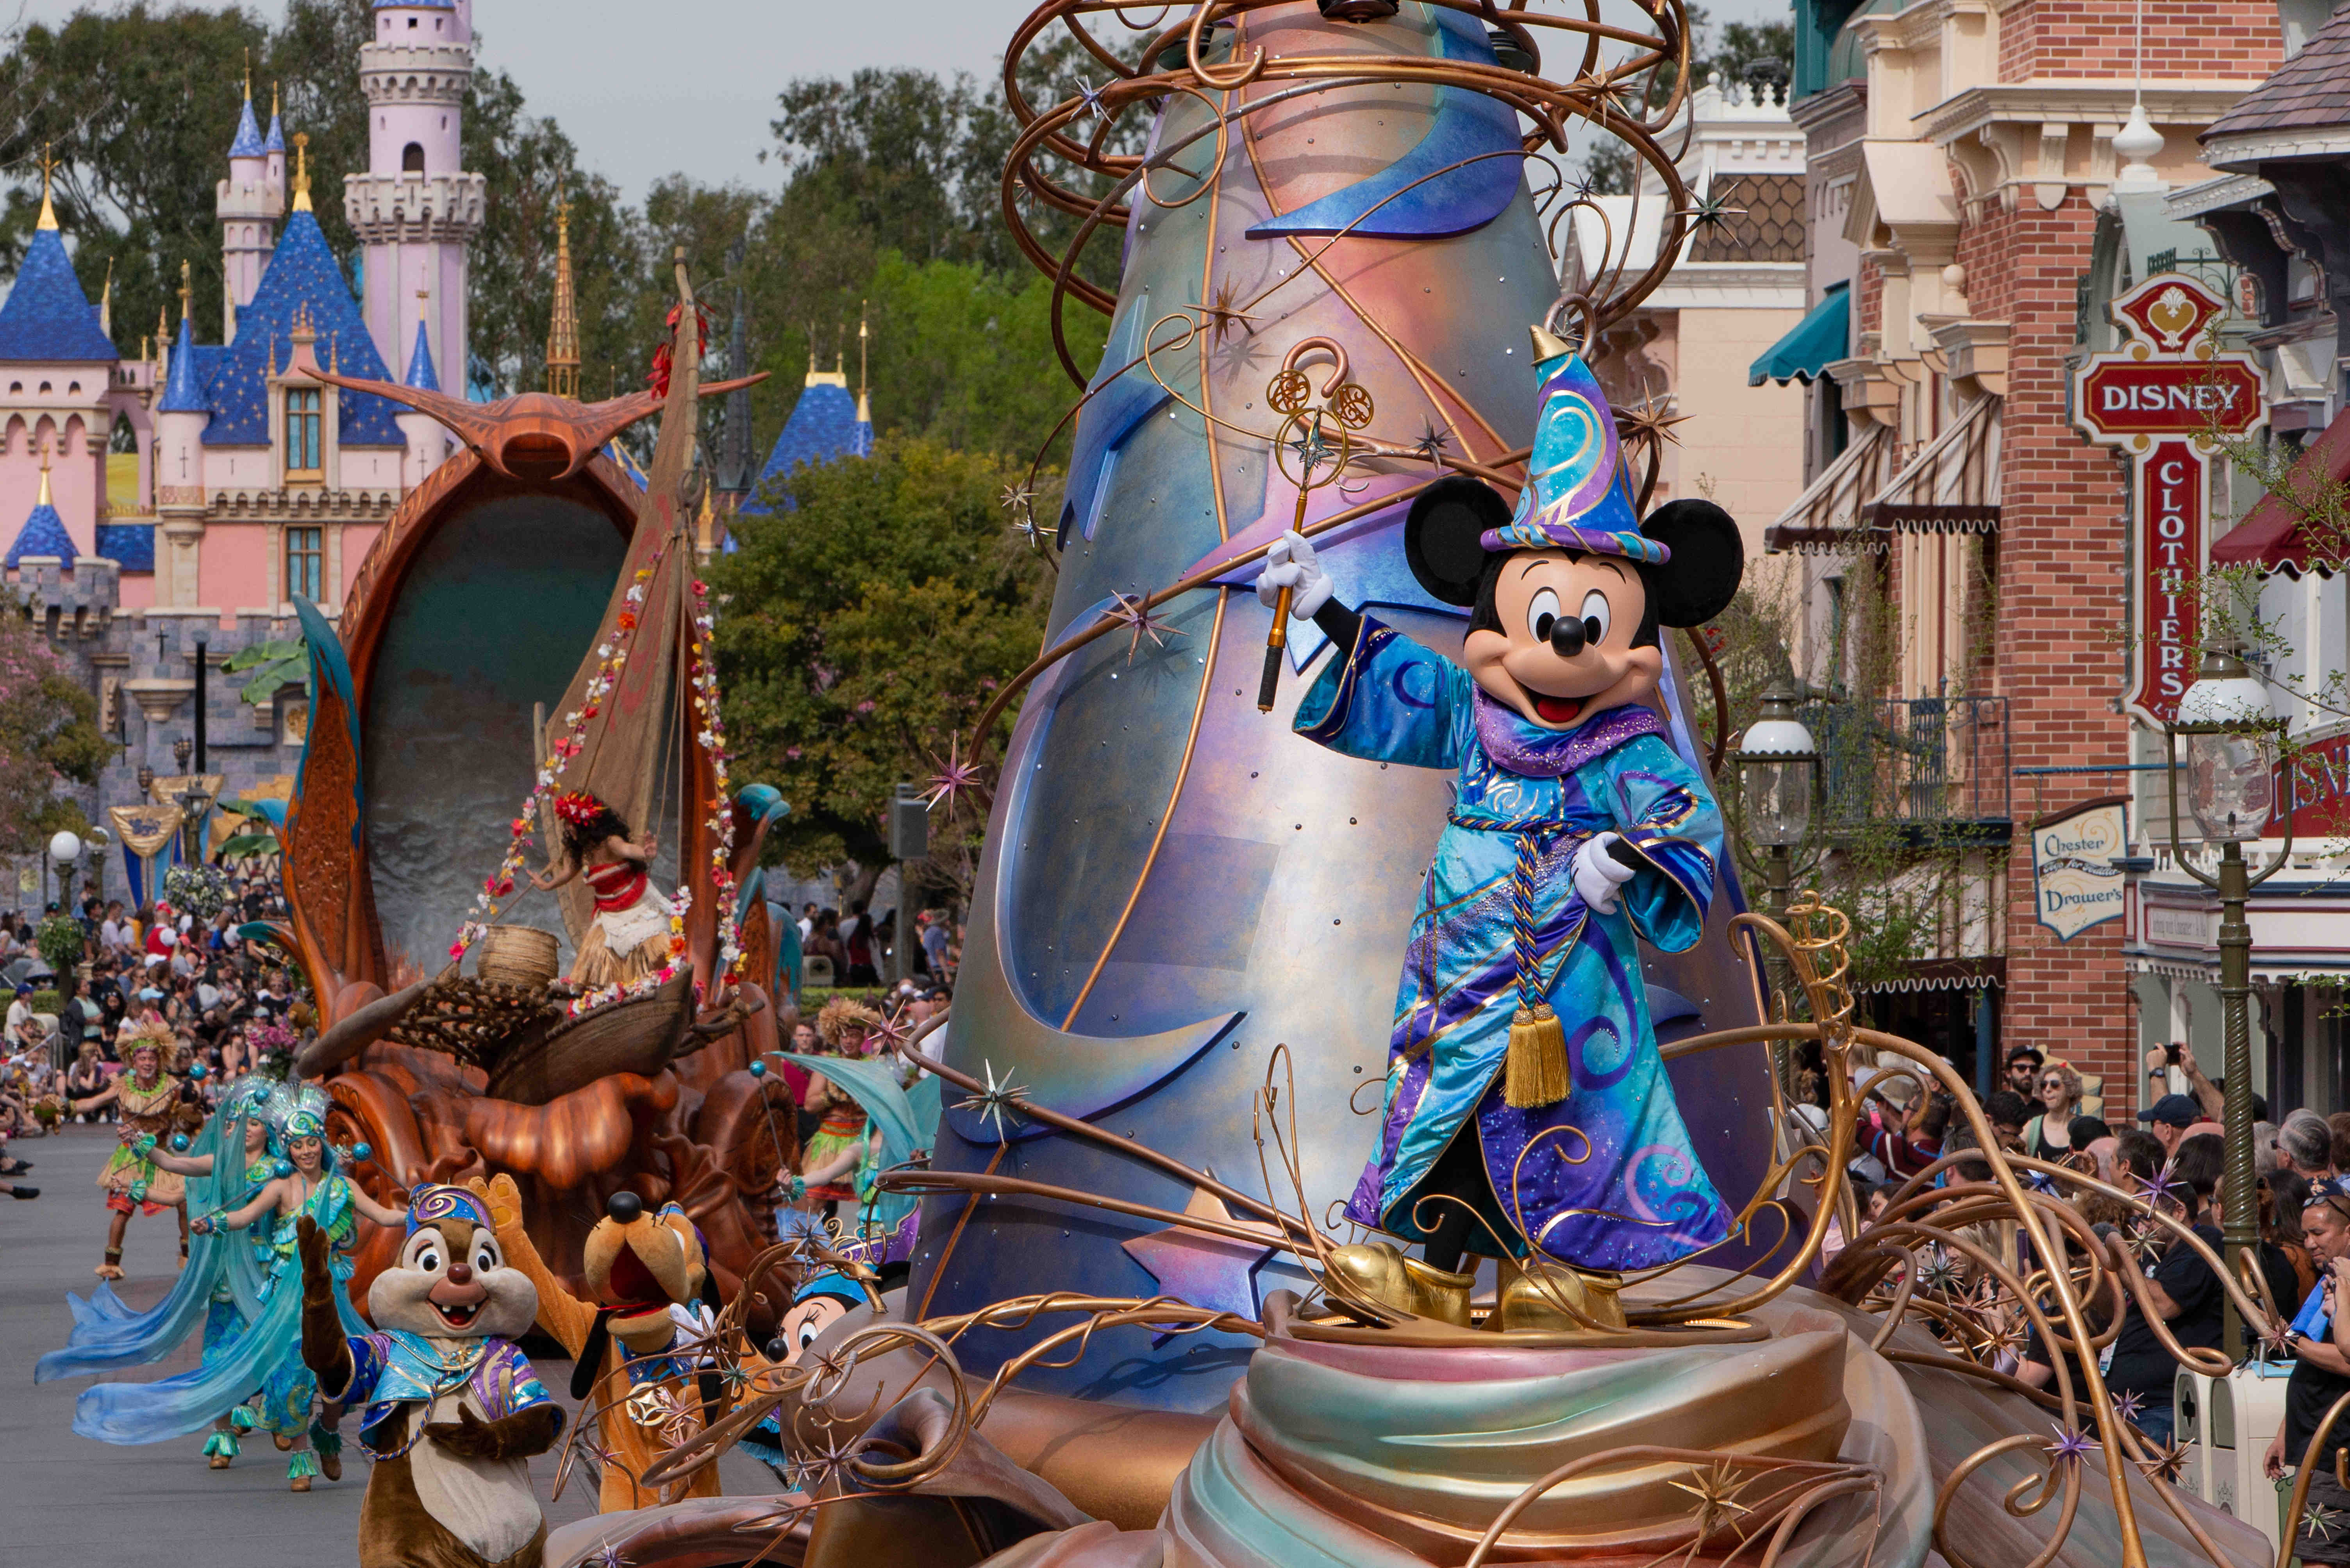 Magic Happens Parade Returns to Disneyland Park